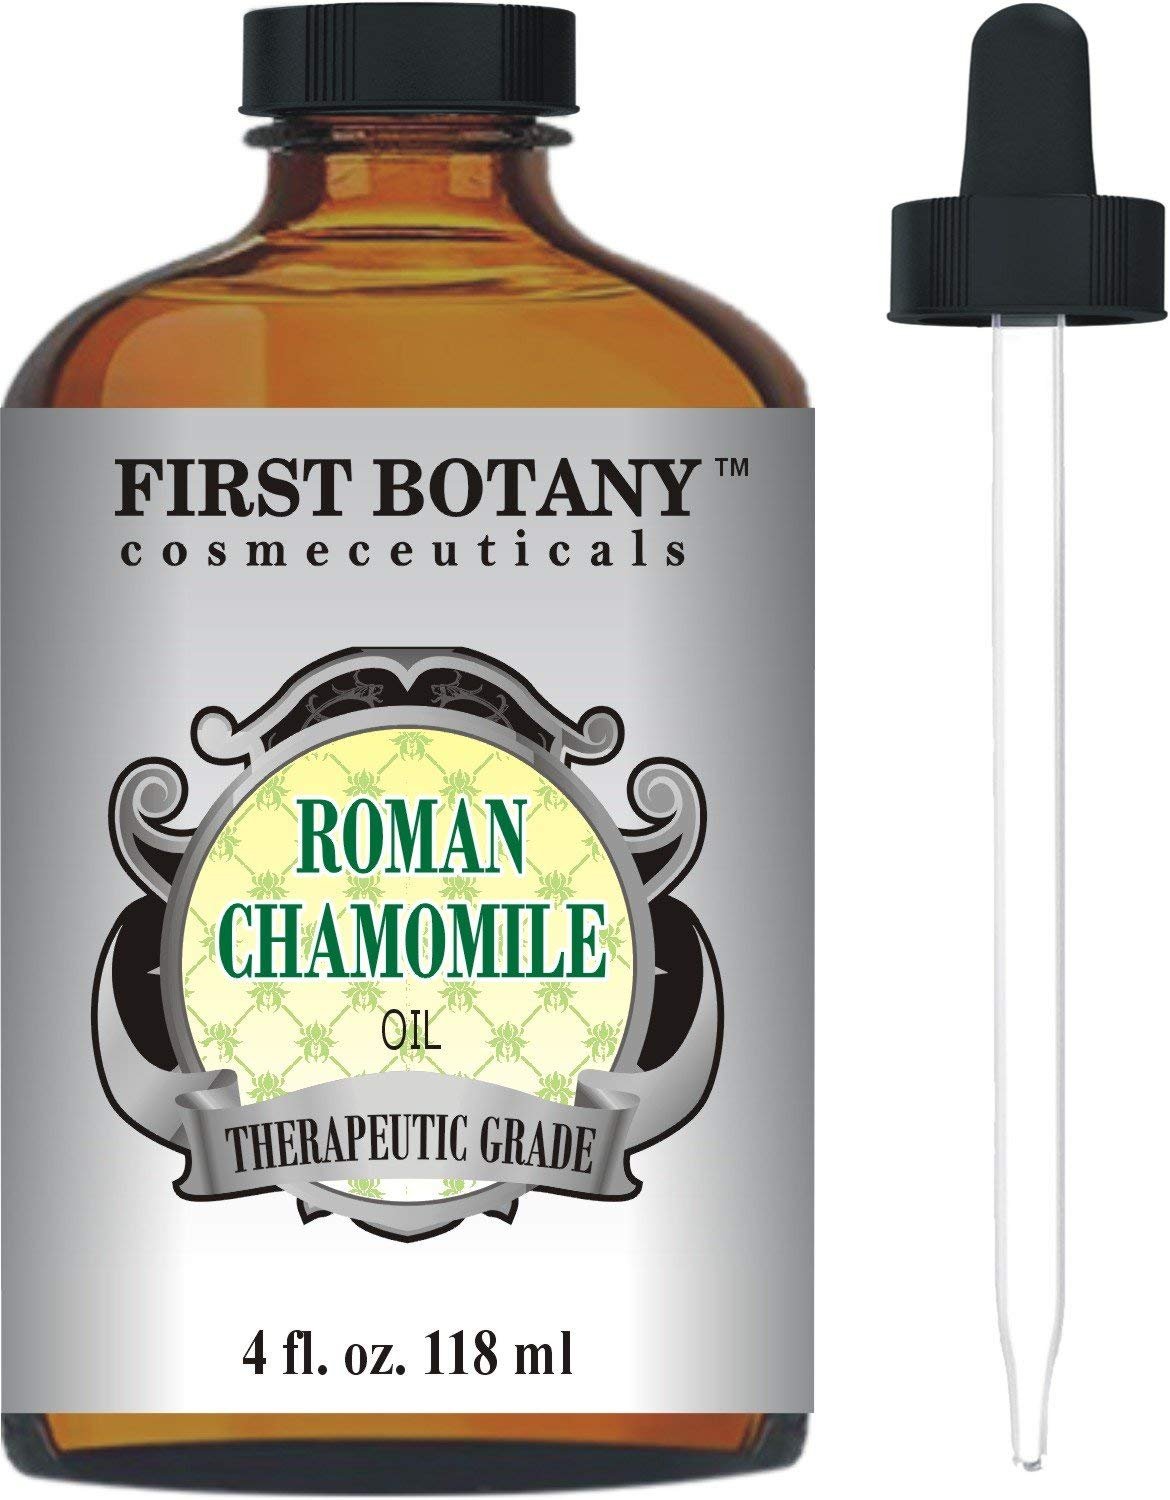 Roman Chamomile Essential Oil with a Glass Dropper - Large 4 fl. oz- Best Premium Quality Oil